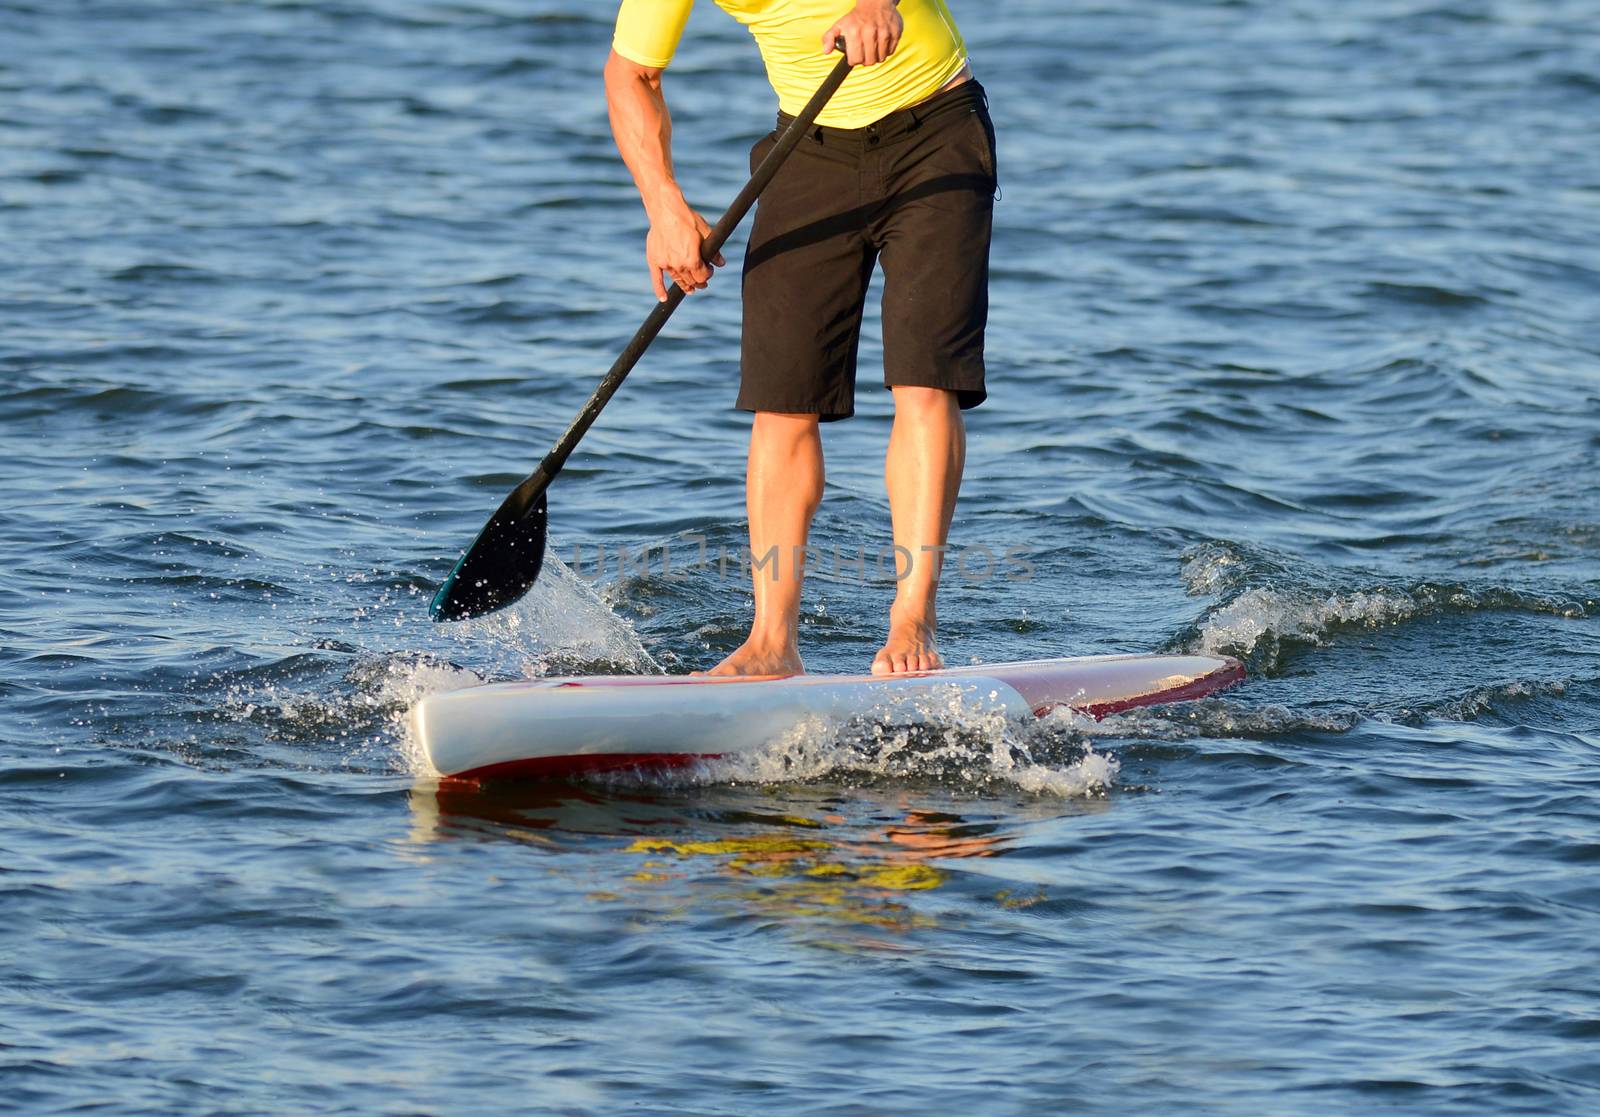 man on a paddle board in ocean by ftlaudgirl